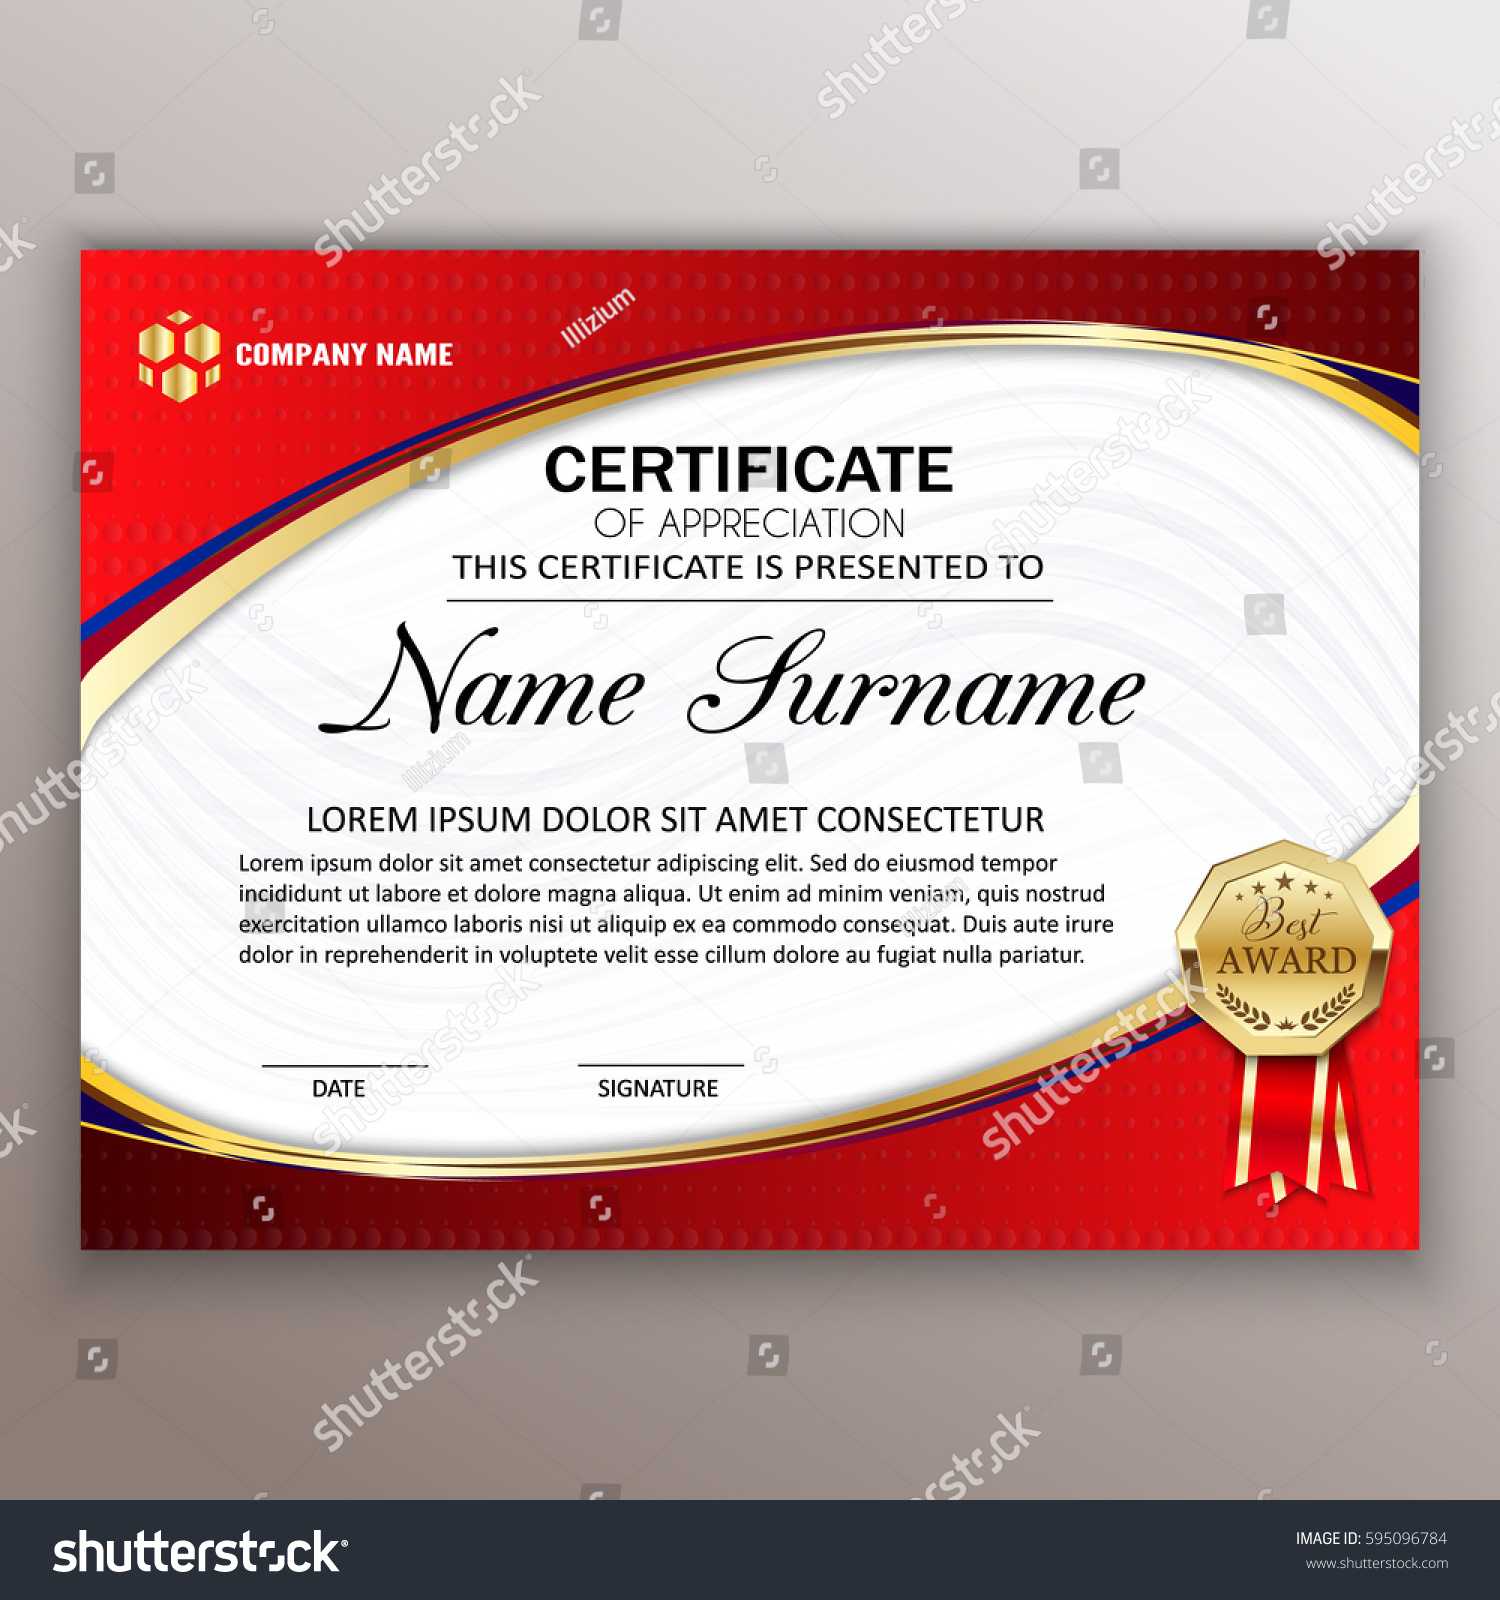 Beautiful Certificate Templates] – 28 Images – 33 Psd Regarding Beautiful Certificate Templates